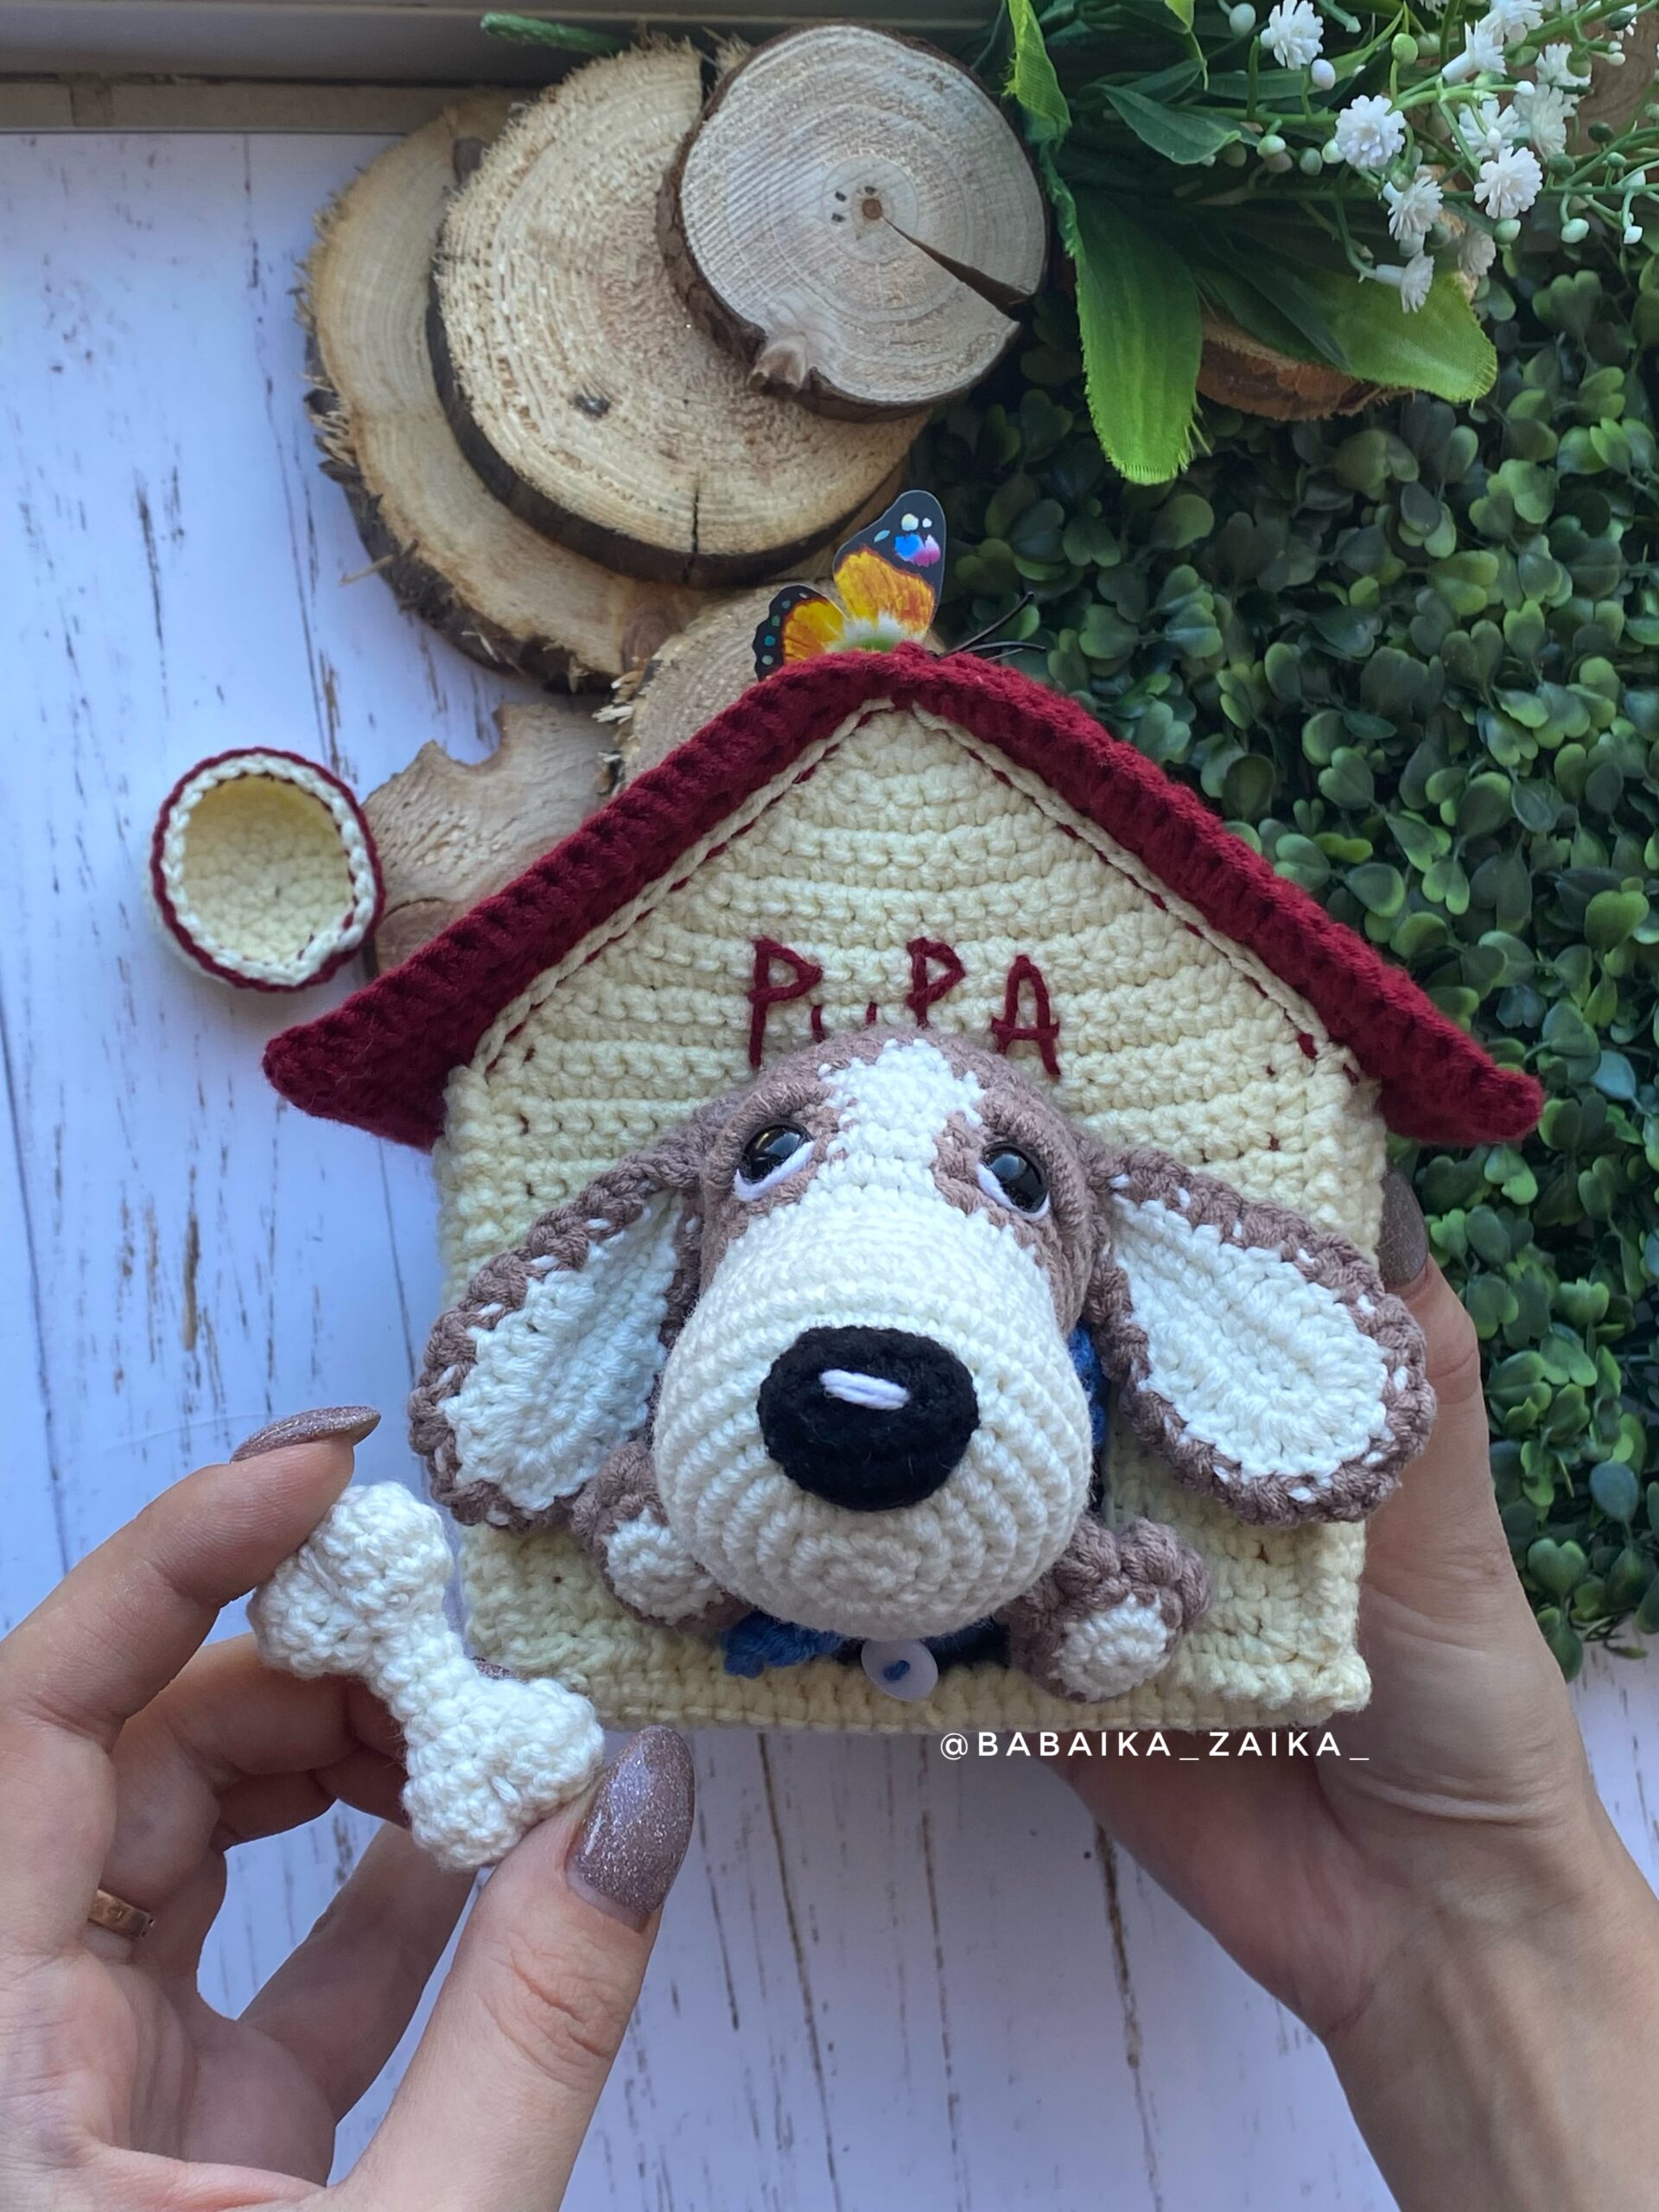 Small House Pet Amigurumi, Free Crochet Patterns - Your Crochet